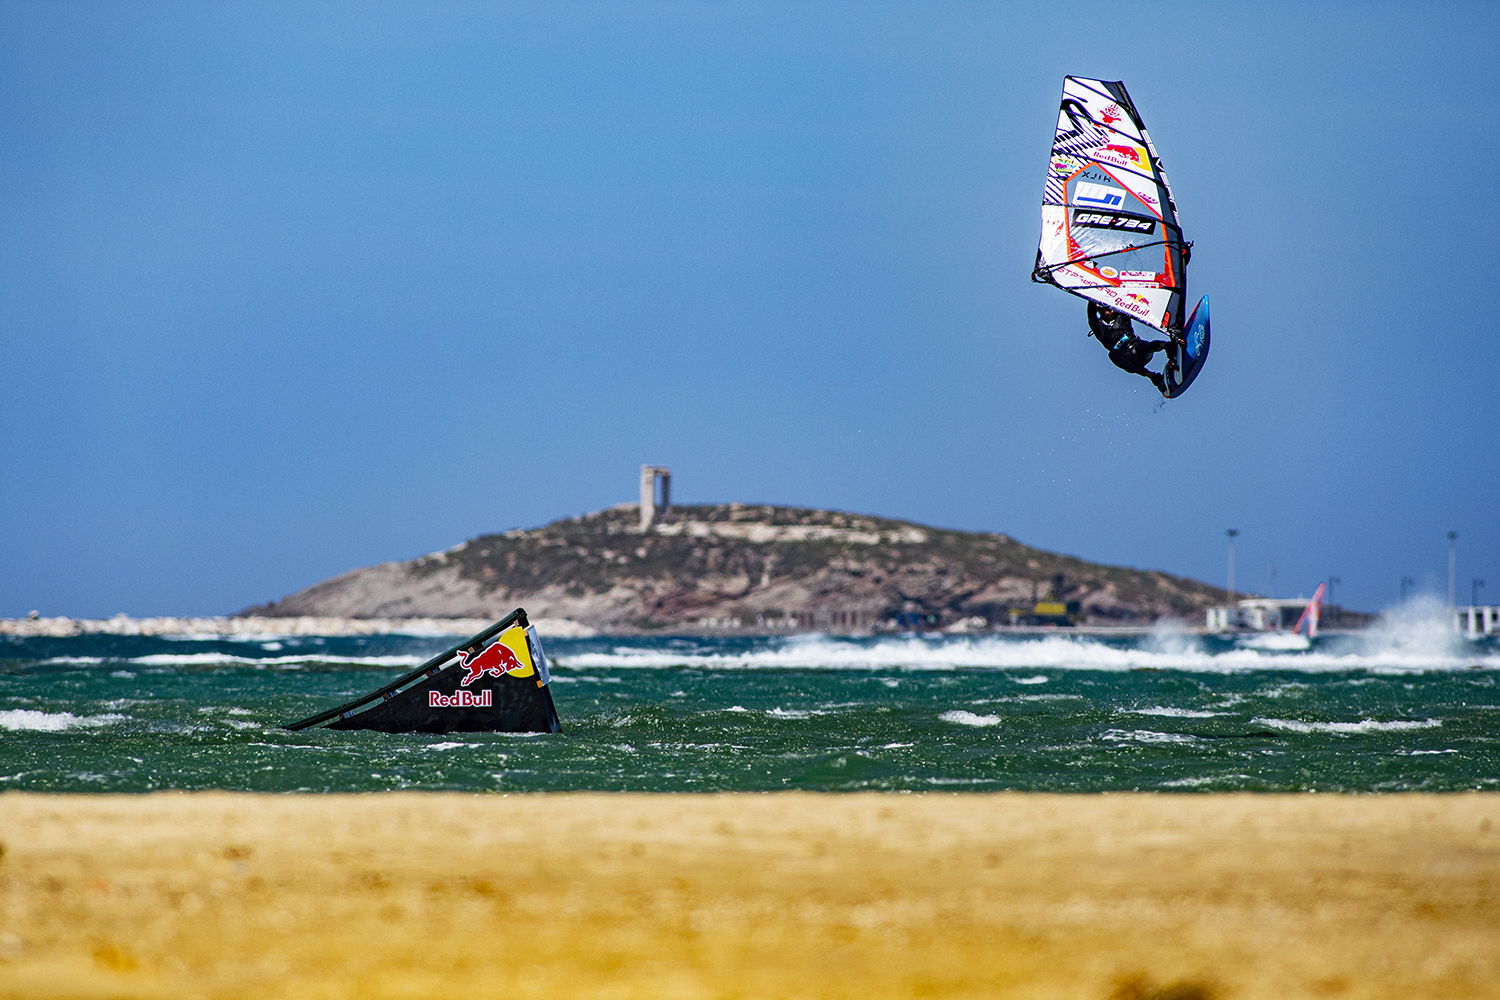 Lennart flying high in Naxos Photo - Ronny Skevis